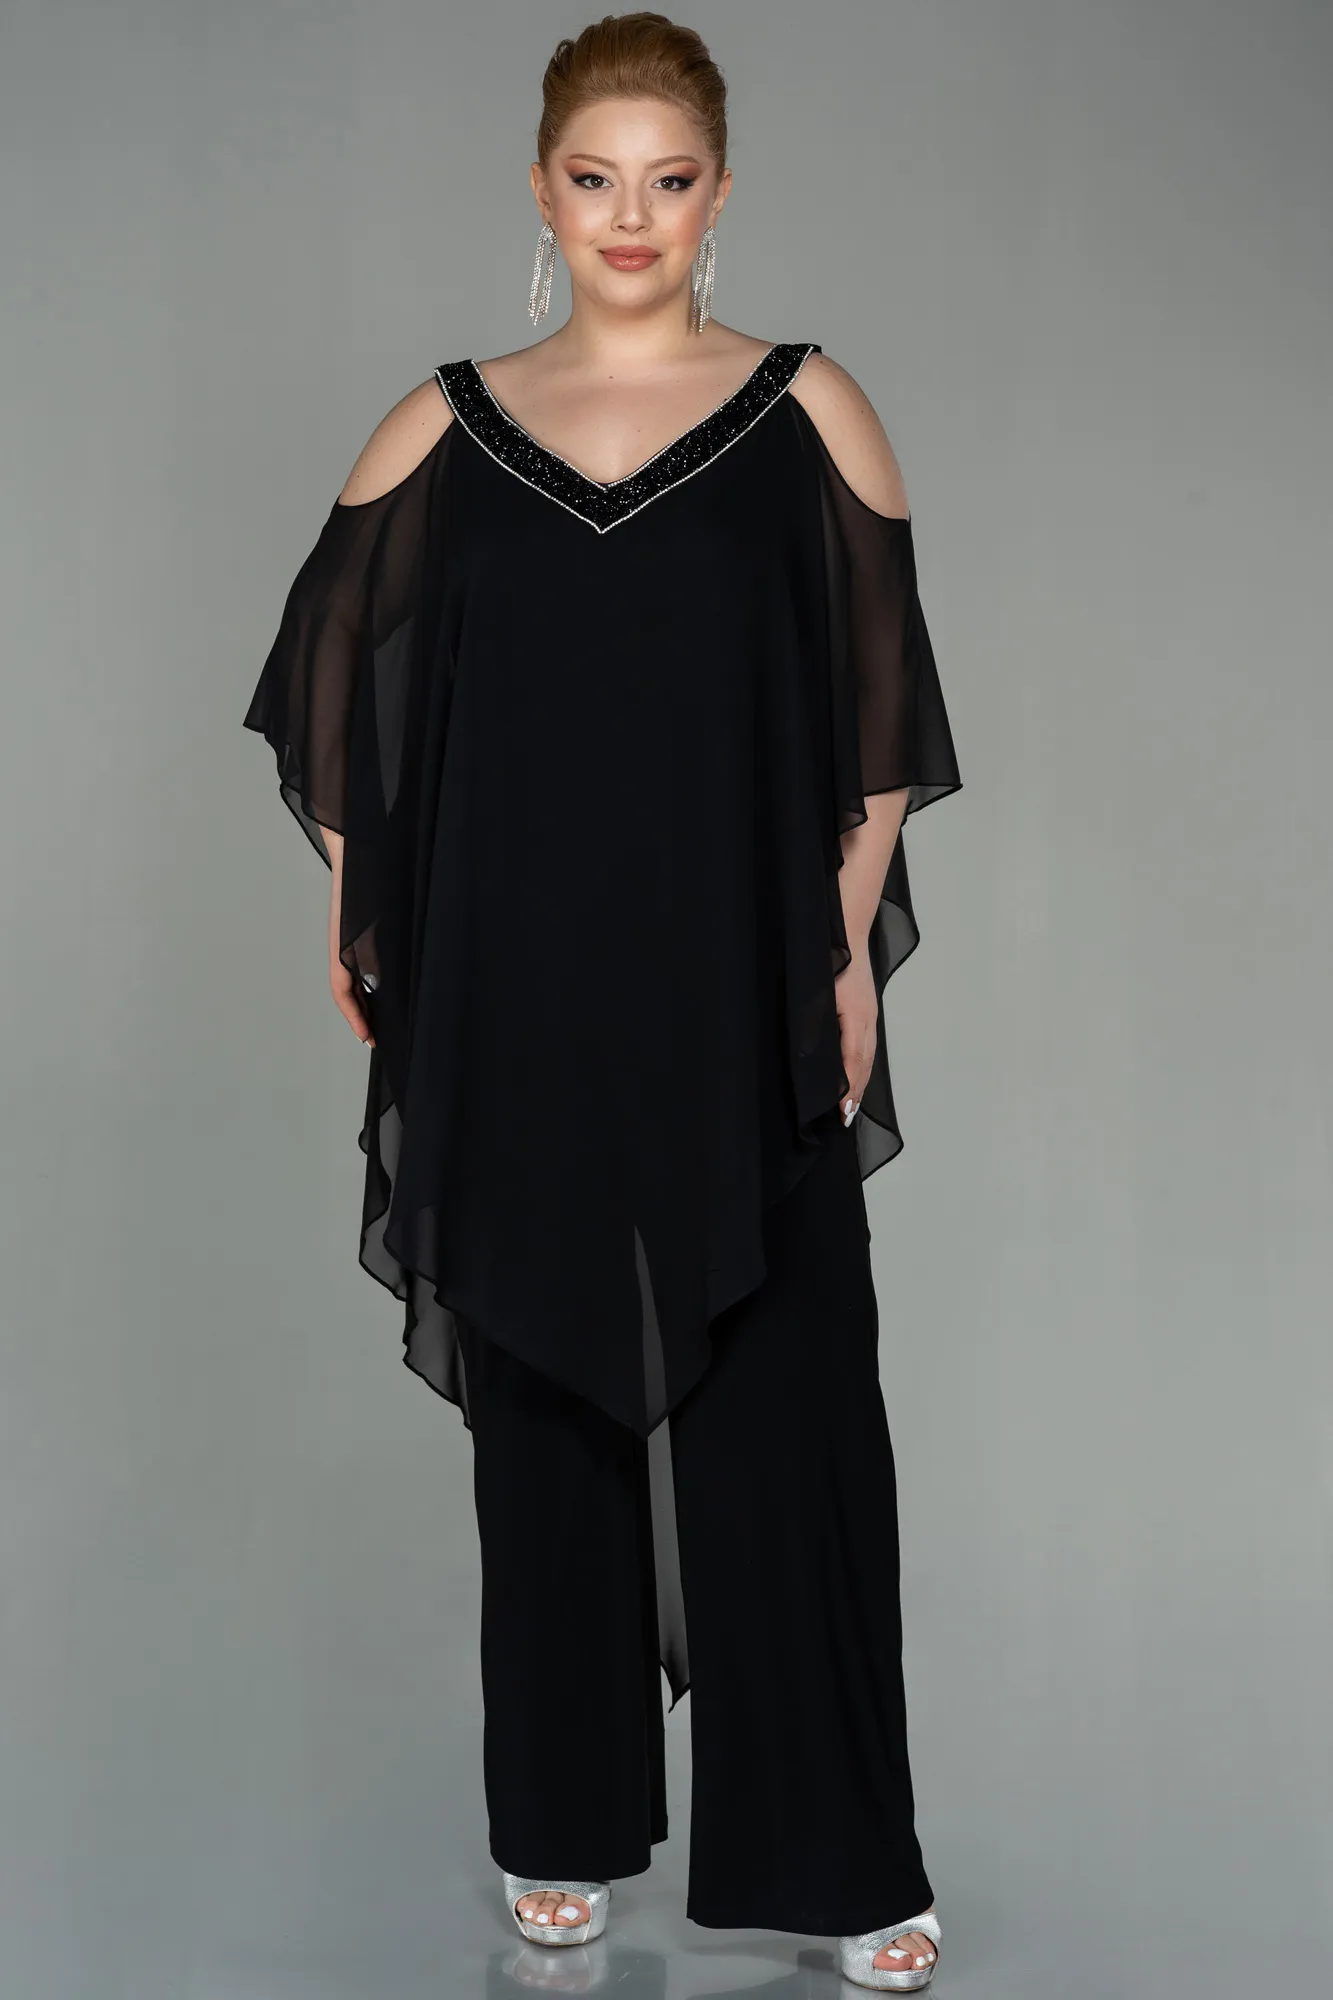 Black-Chiffon Plus Size Evening Dress ABT096